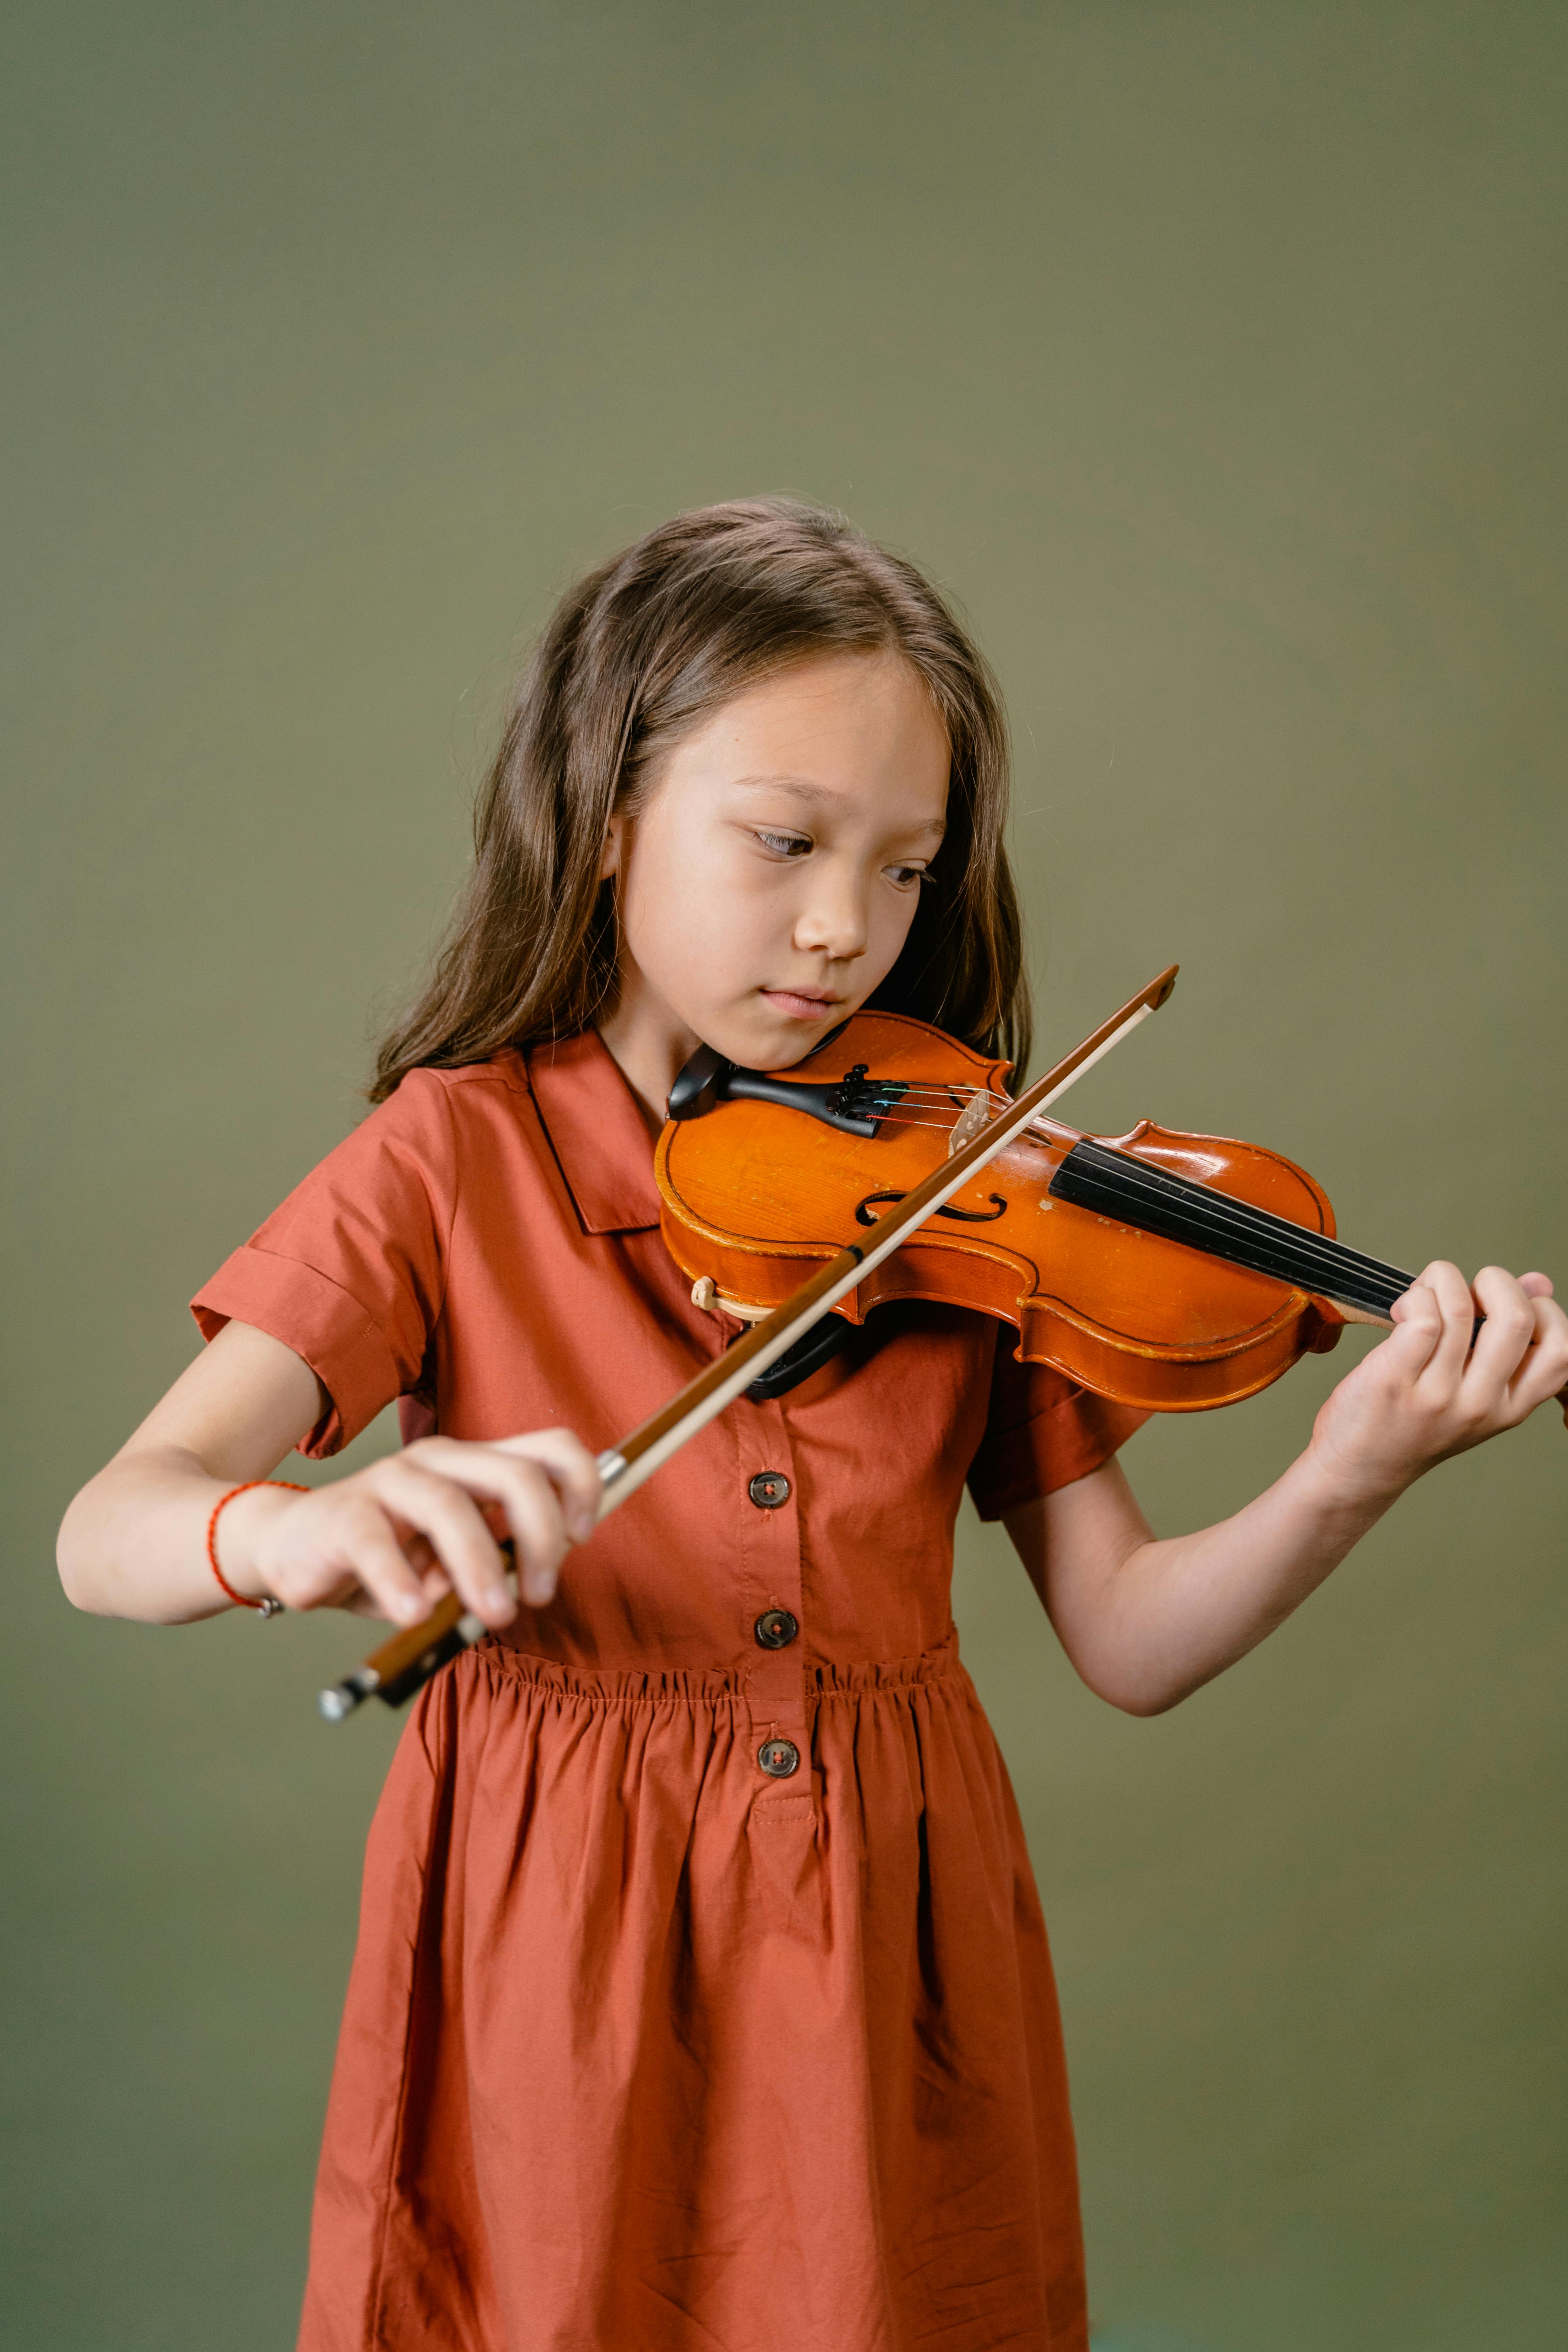 bent Til meditation forurening Girl Playing the Violin · Free Stock Photo